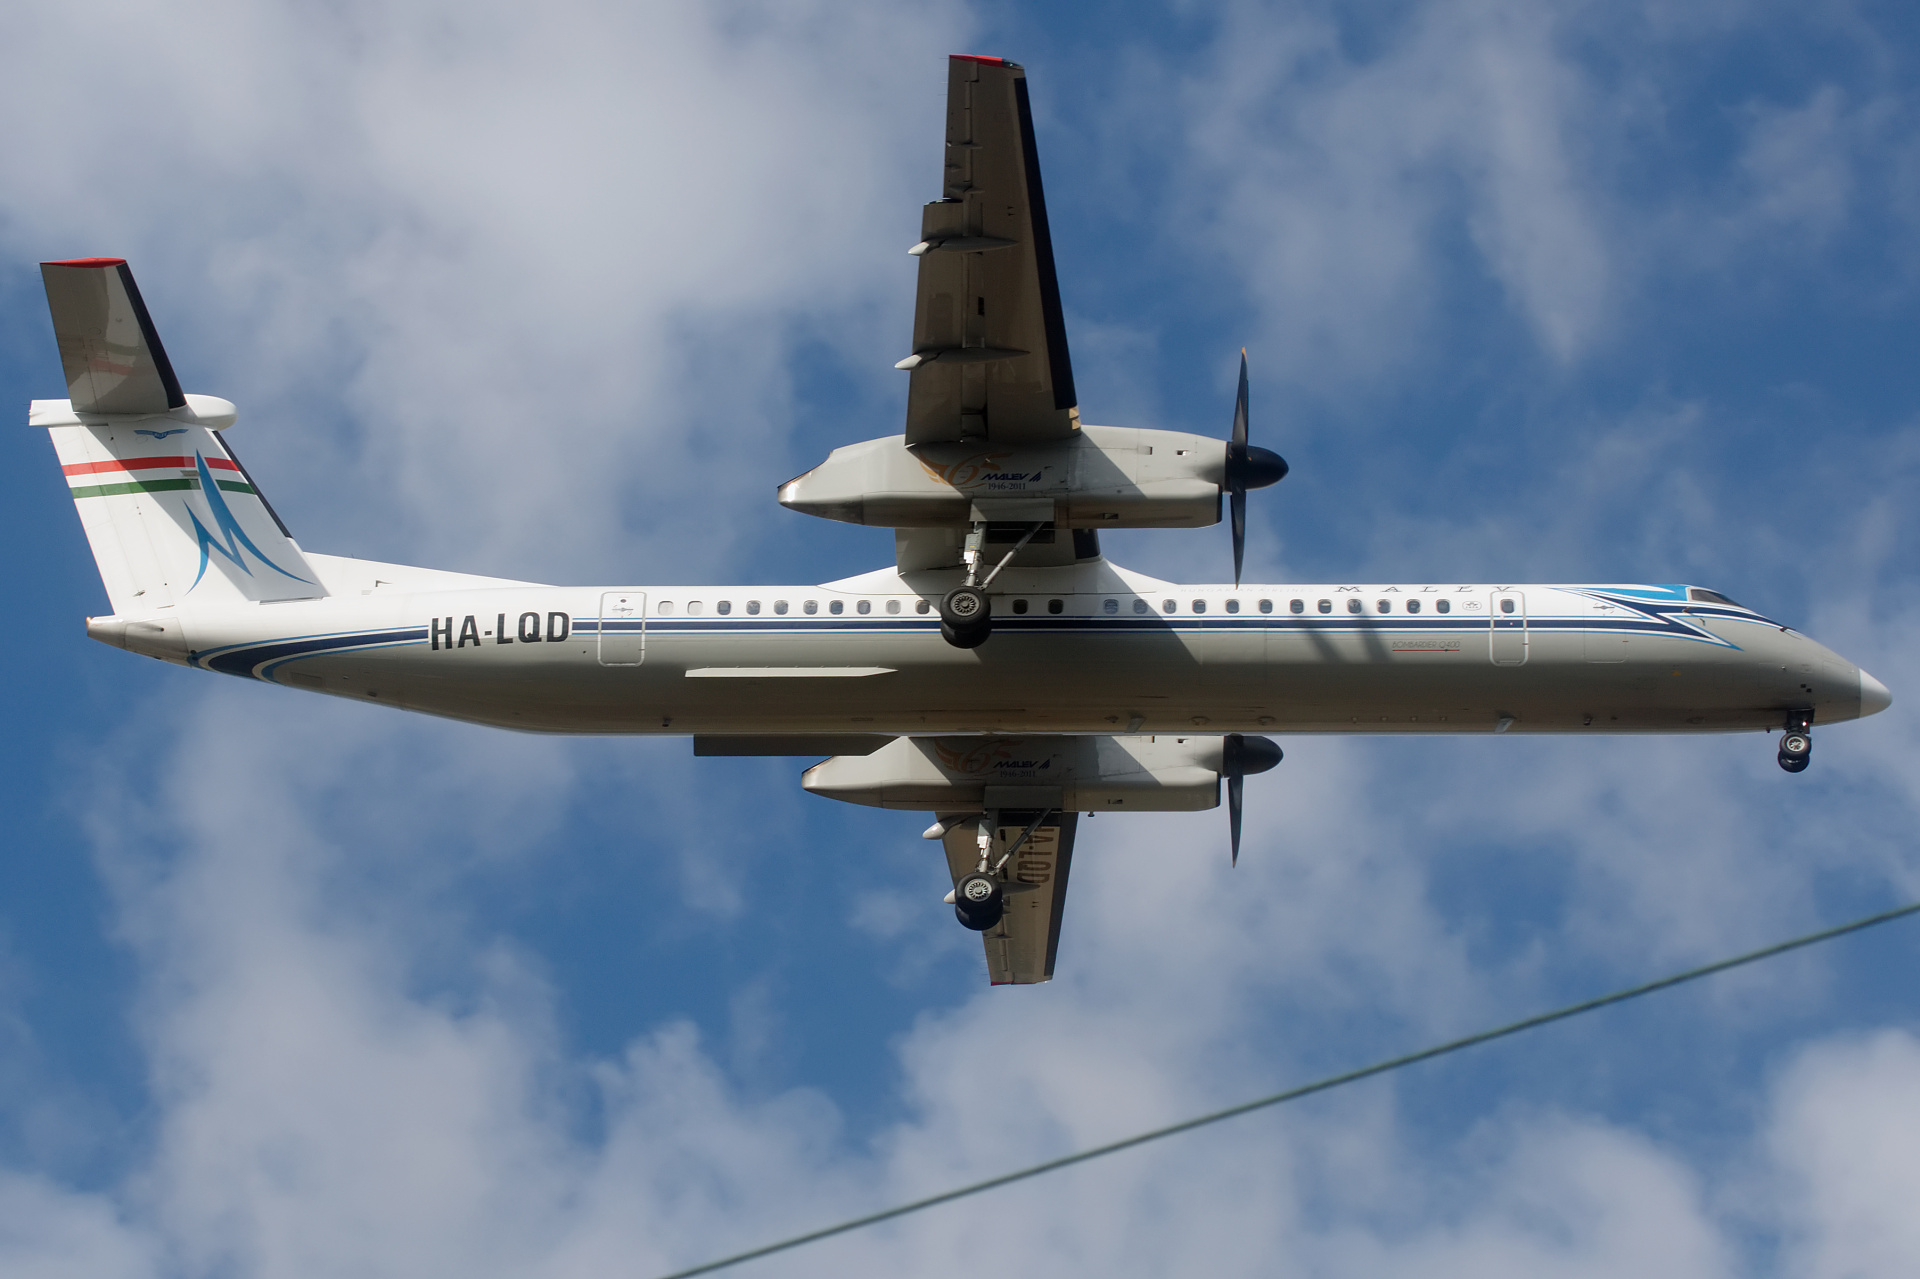 HA-LQD (retro livery) (Aircraft » EPWA Spotting » De Havilland Canada DHC-8 Dash 8 » Malév Hungarian Airlines)